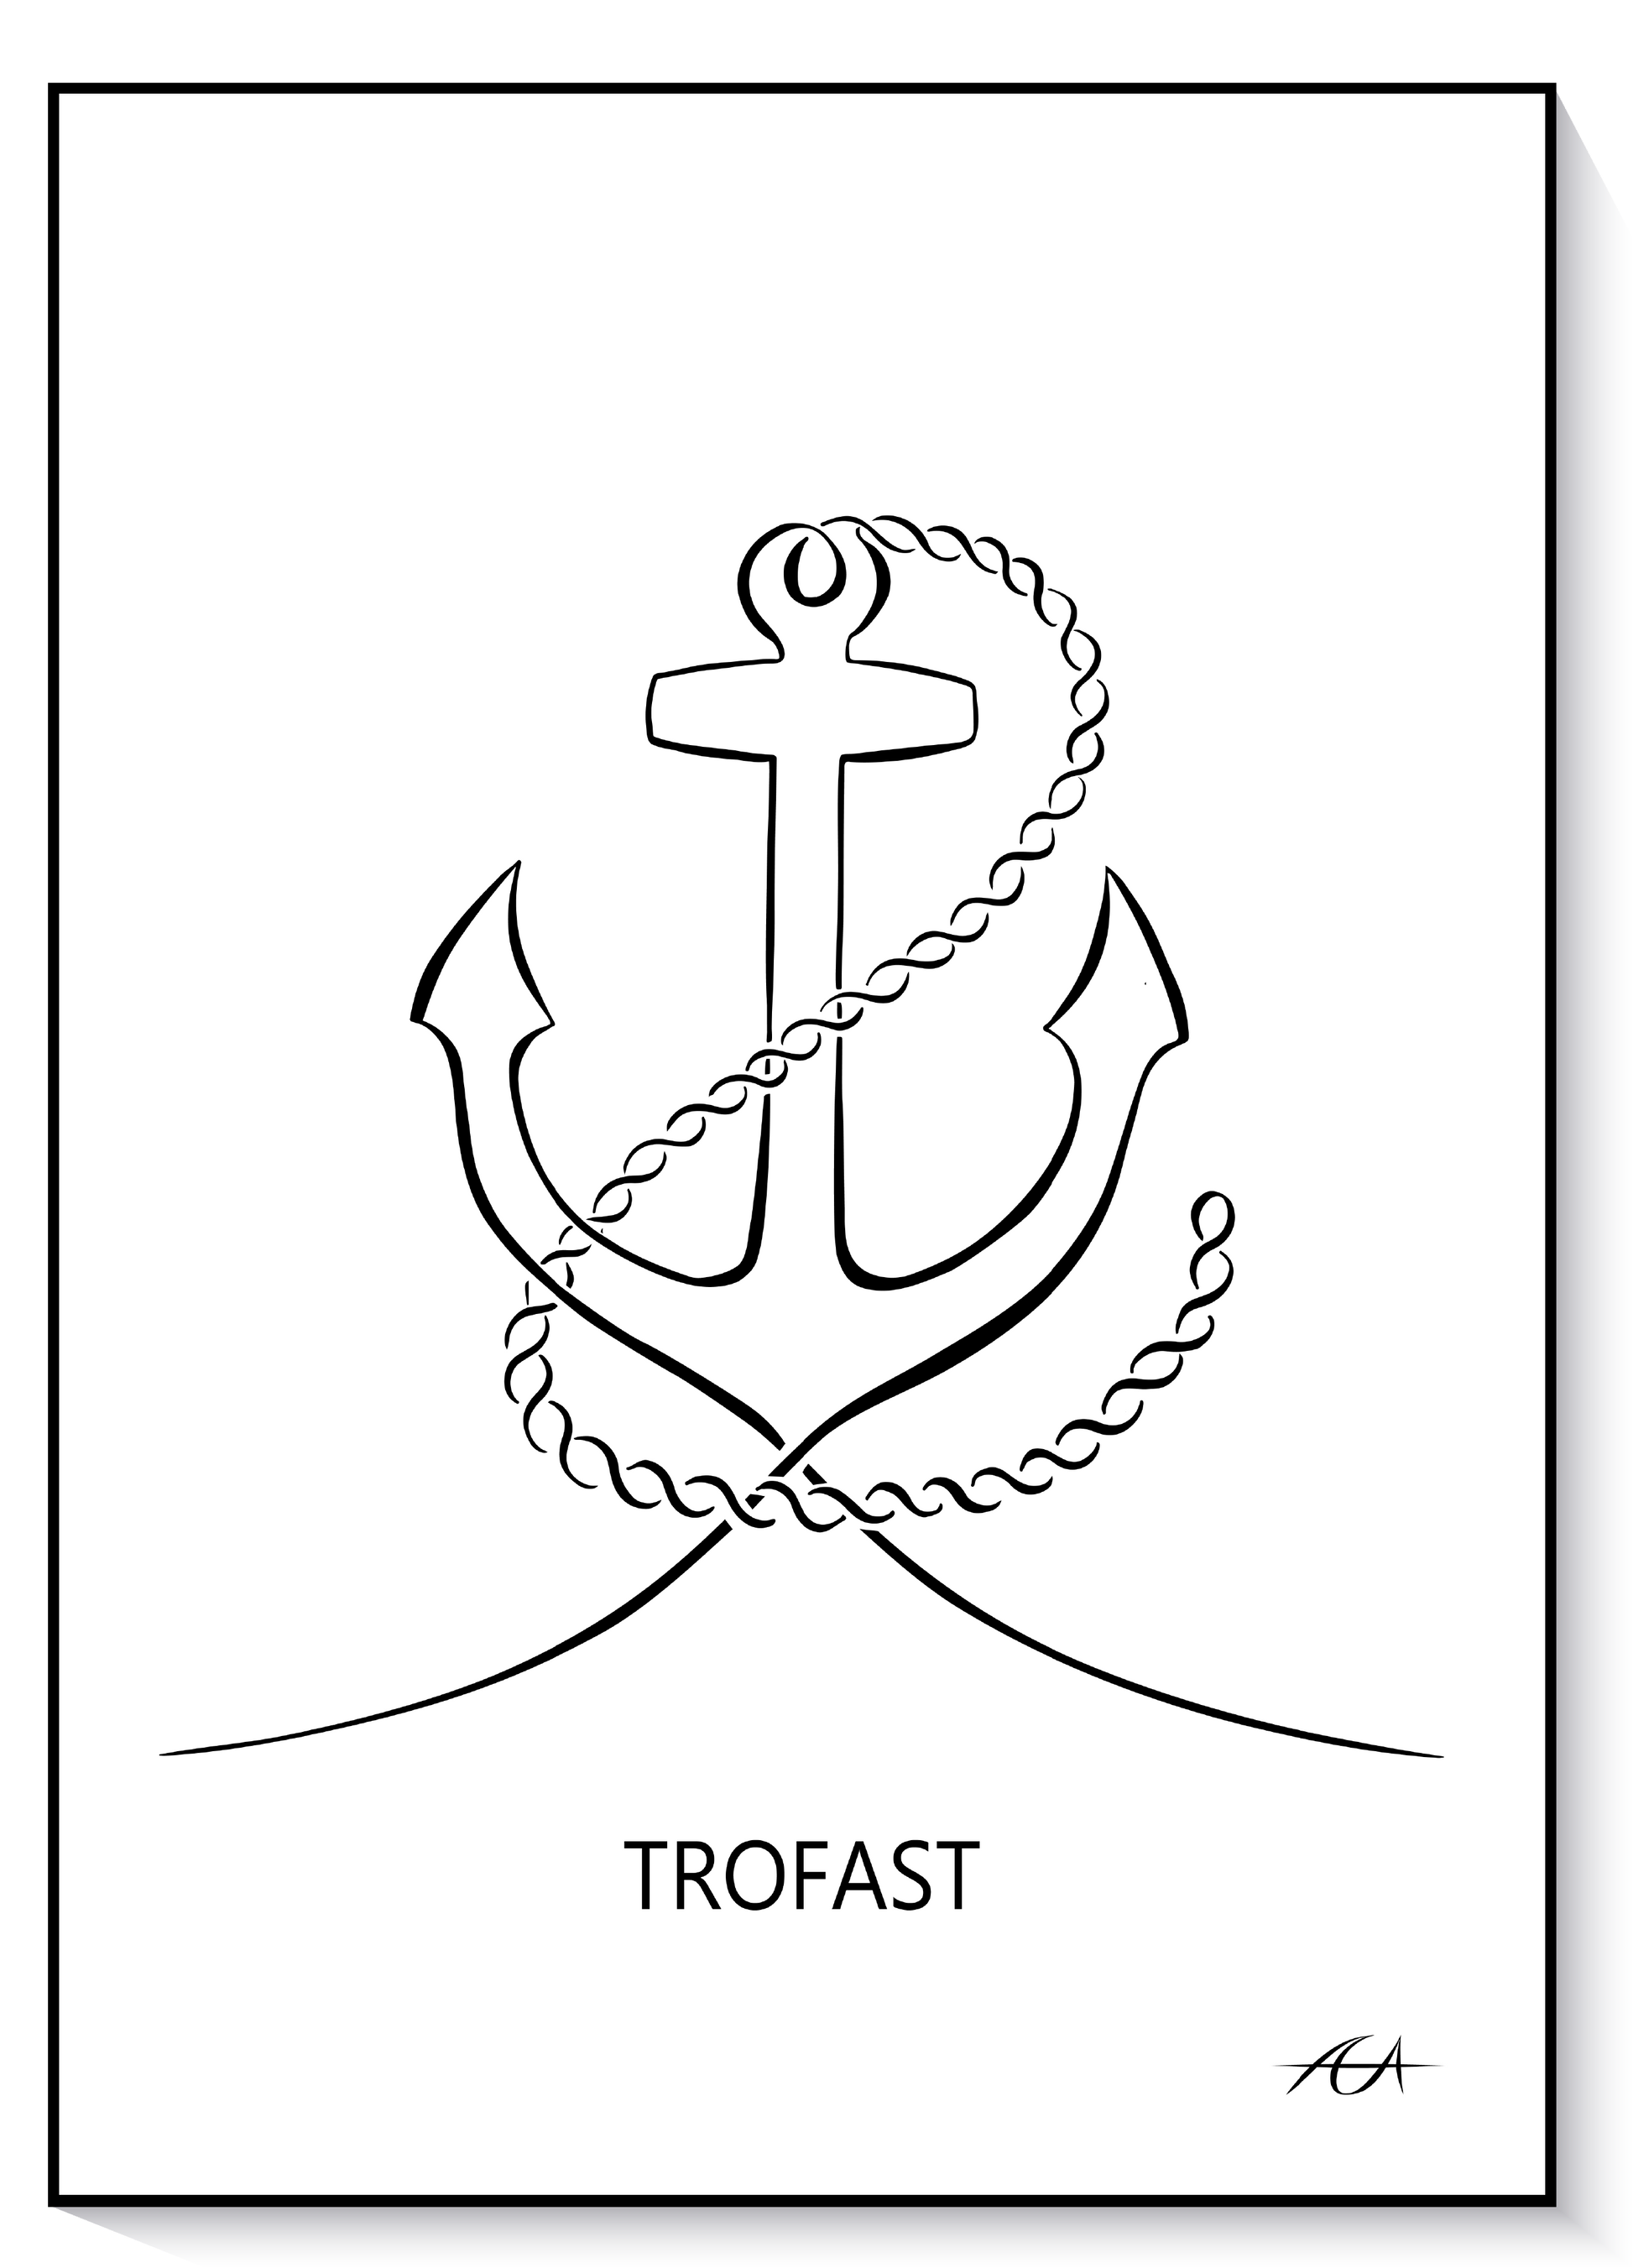 Trofast - AEArt